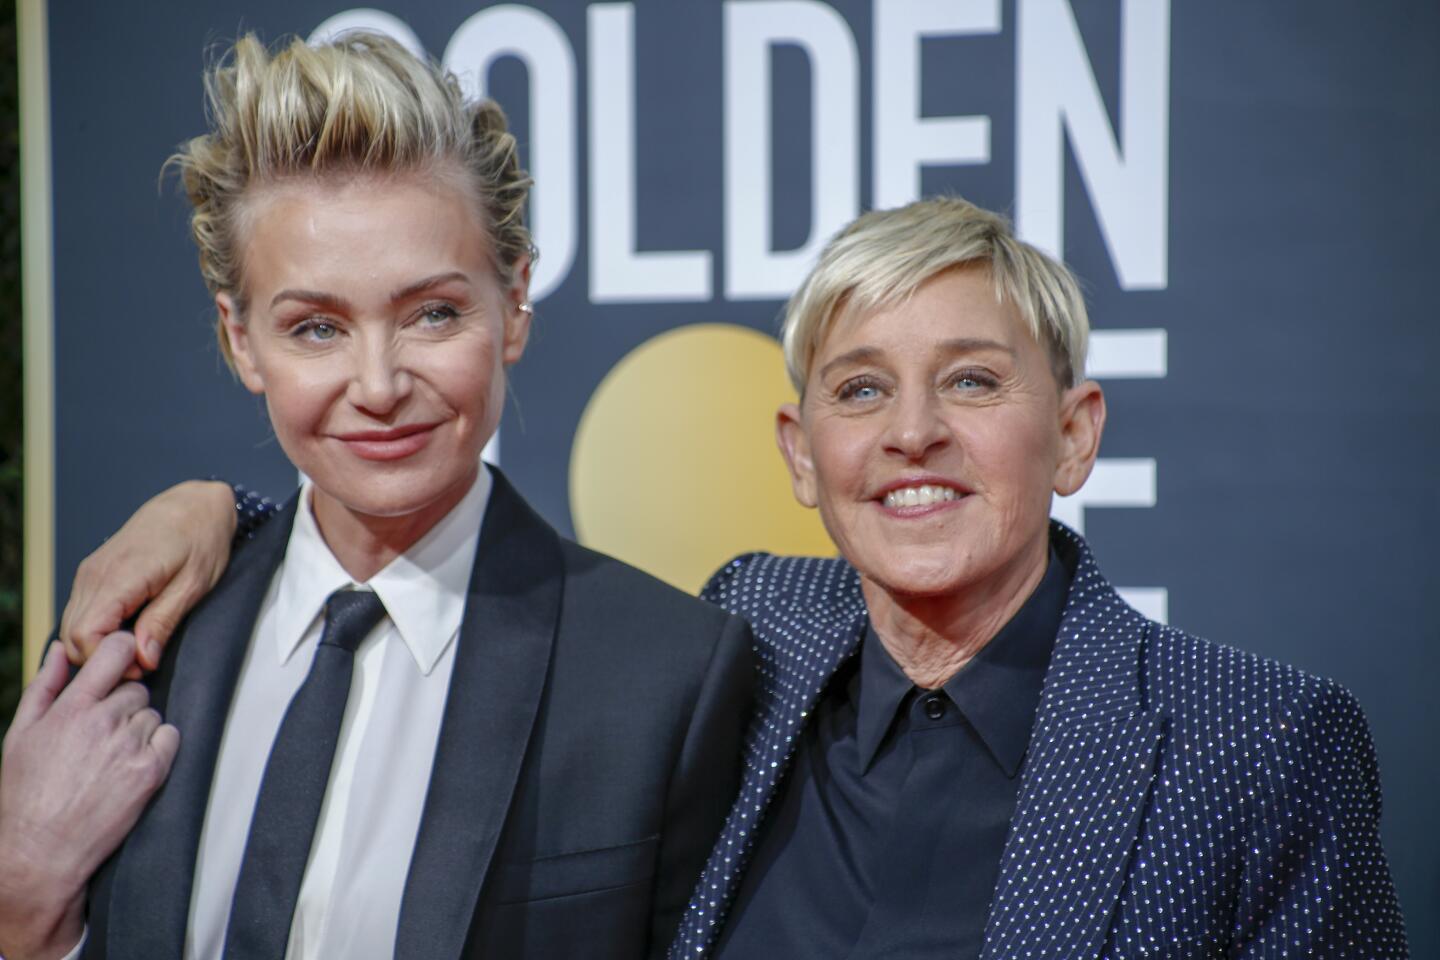 Portia de Rossi and Ellen DeGeneres on the red carpet